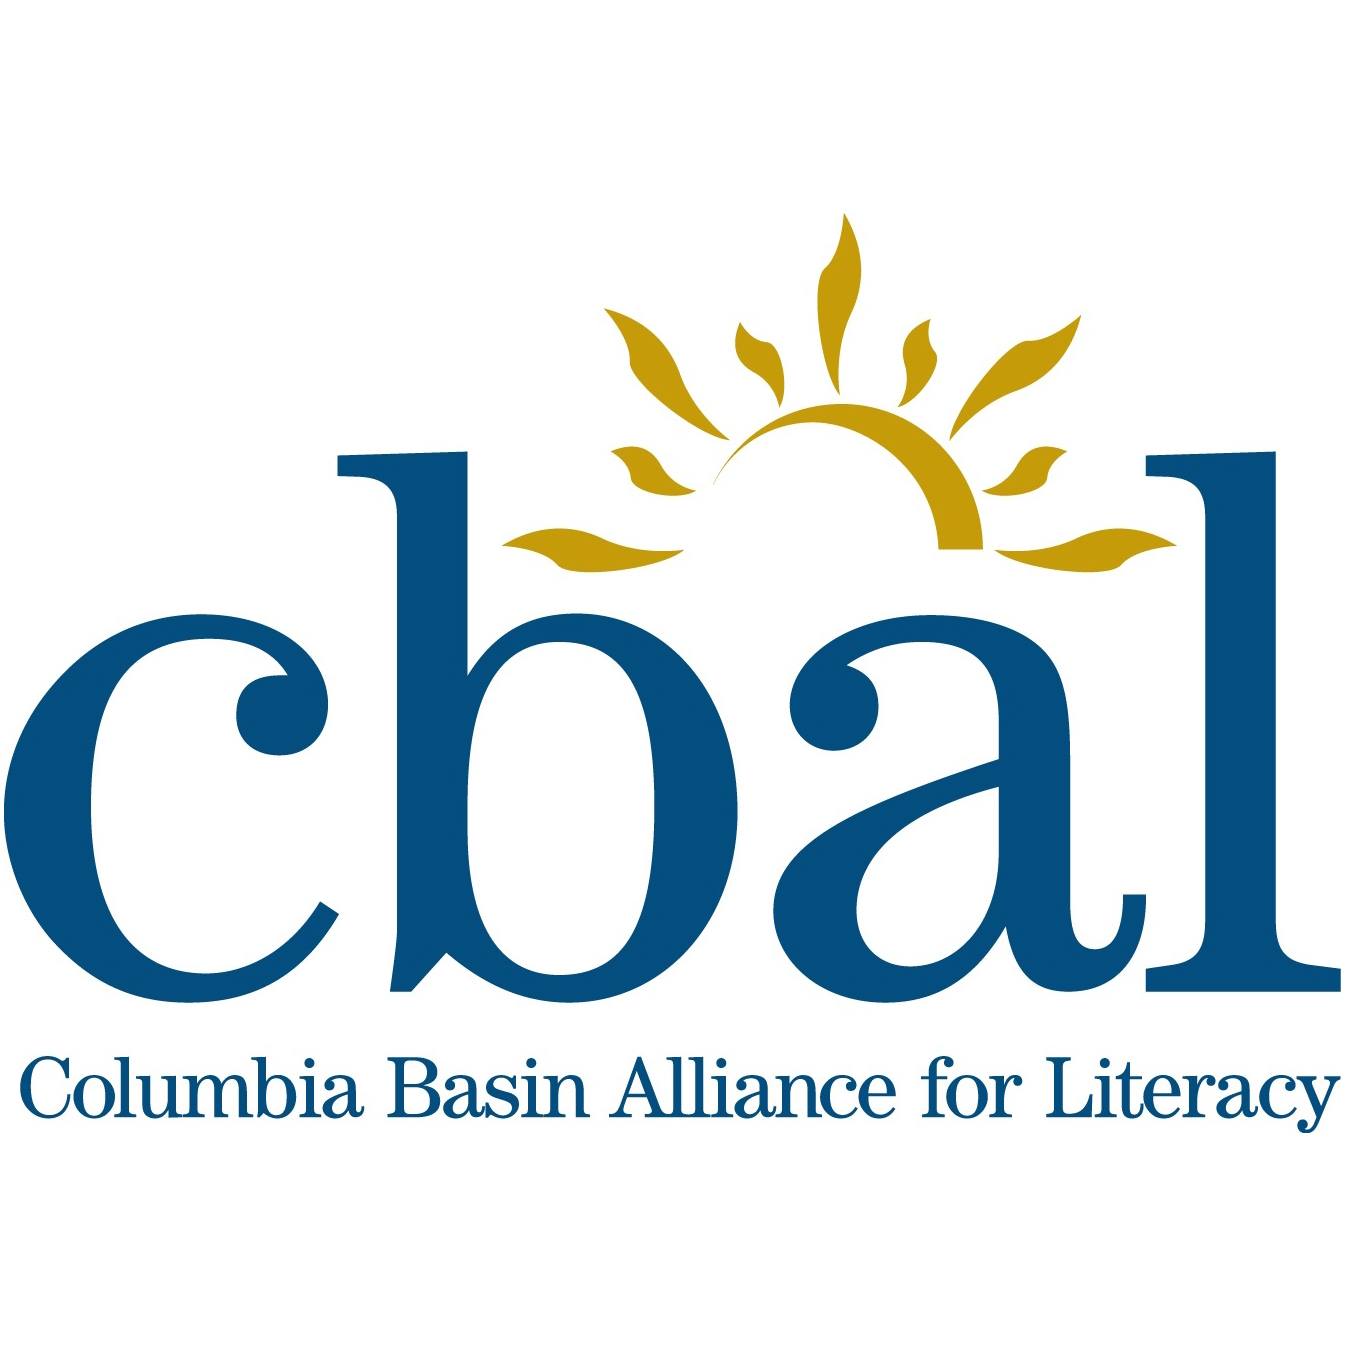 COLUMBIA BASIN ALLIANCE FOR LITERACY logo